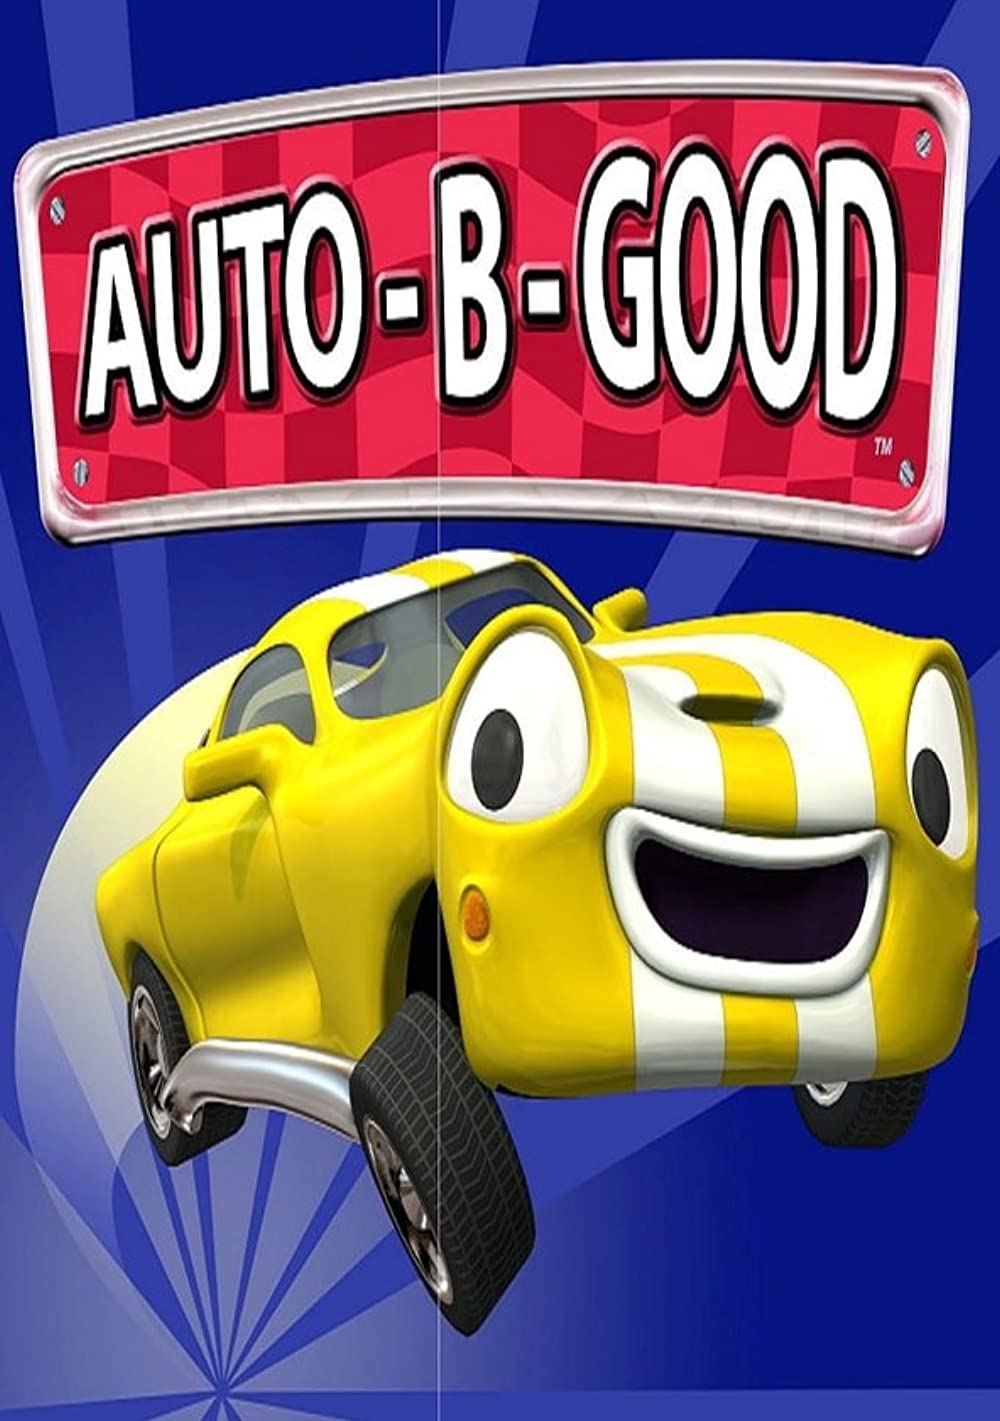 Auto-B-Good